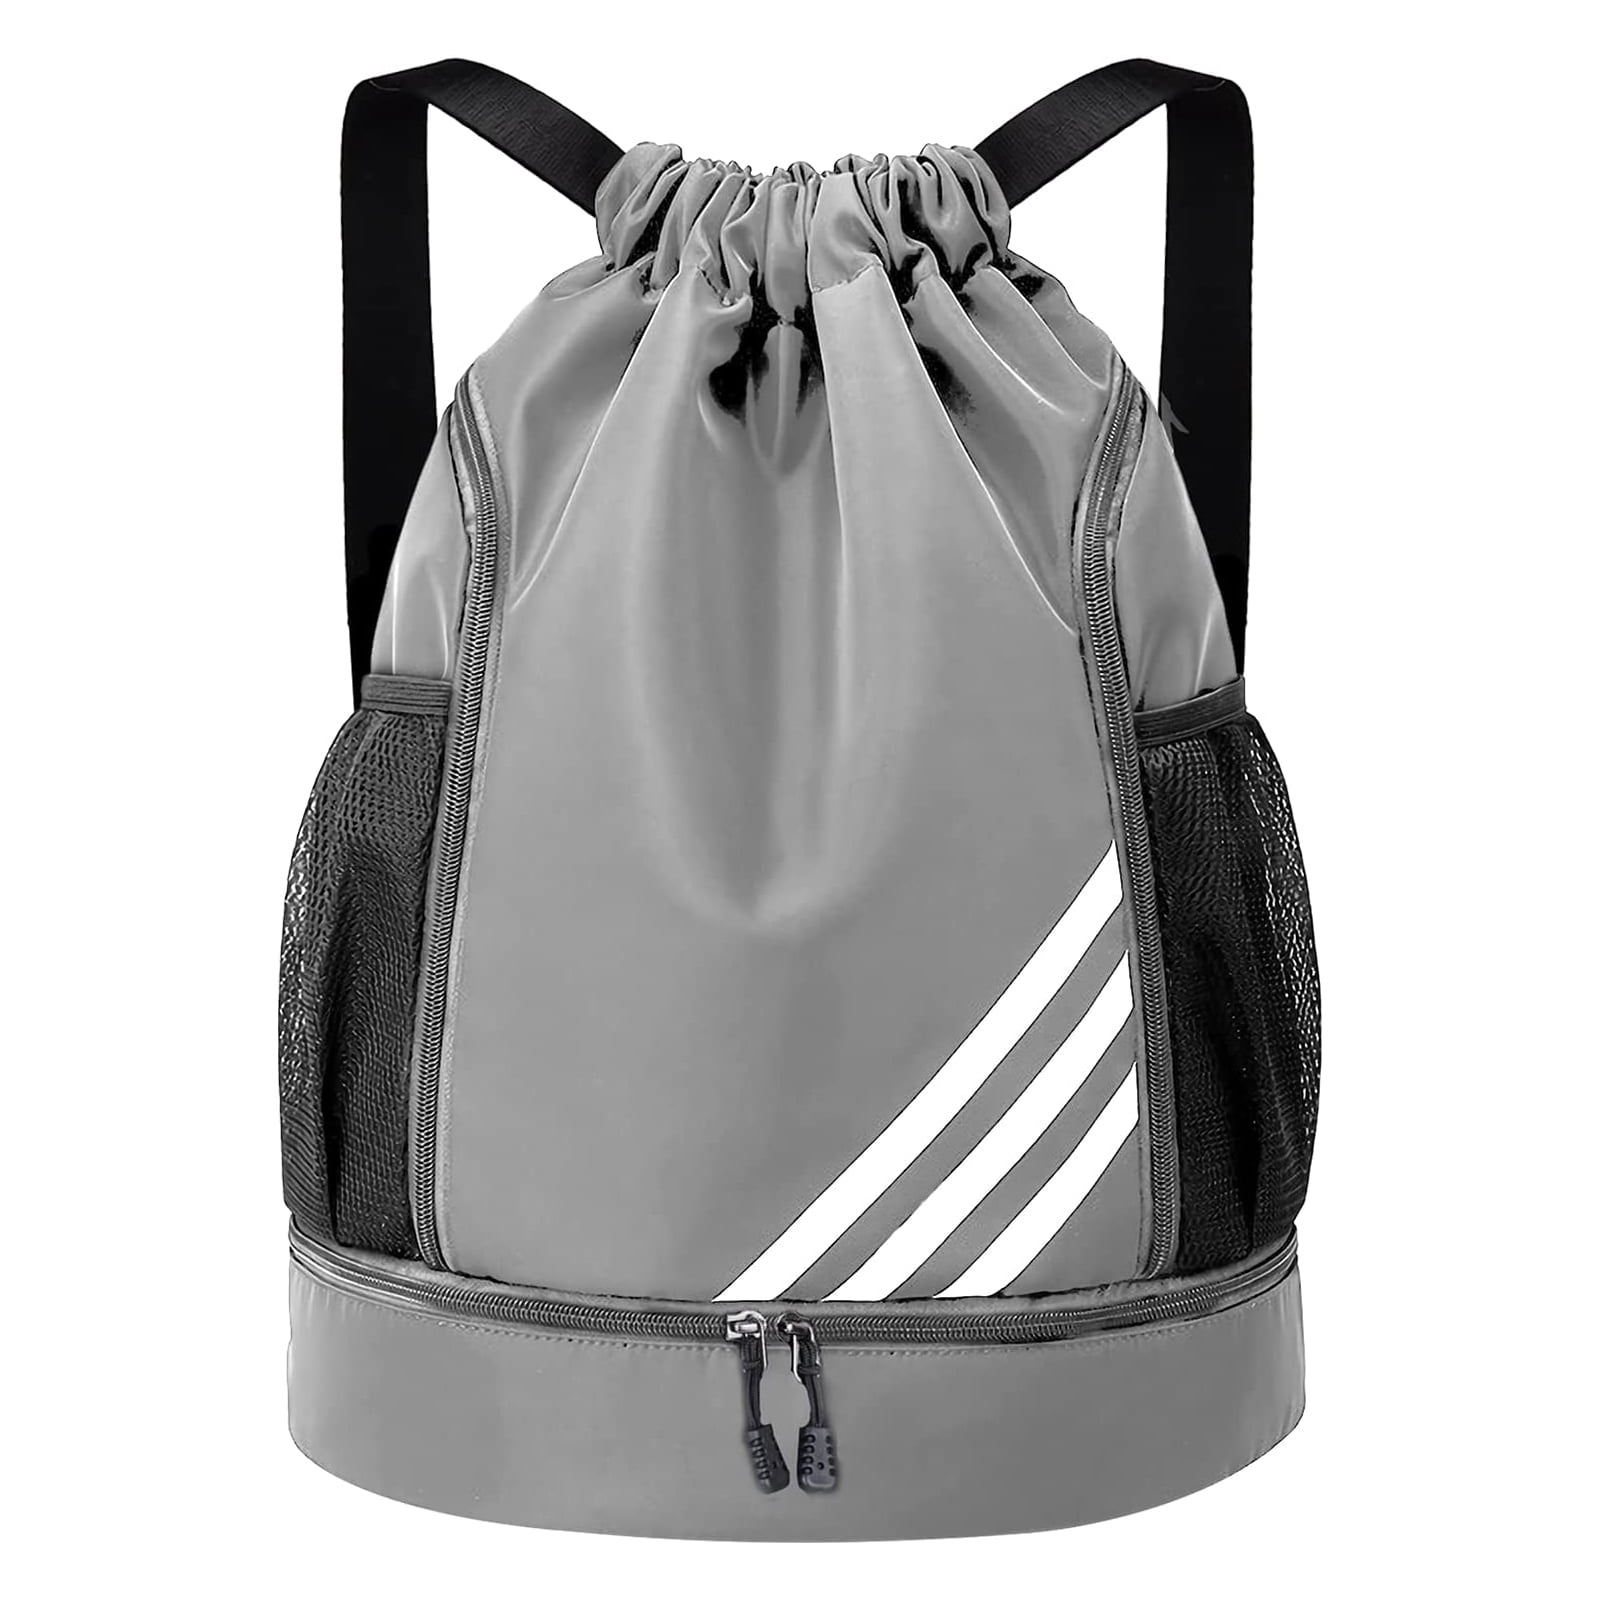 Qoosea Drawstring Backpack Waterproof String Gym Sports Bag Swim ...